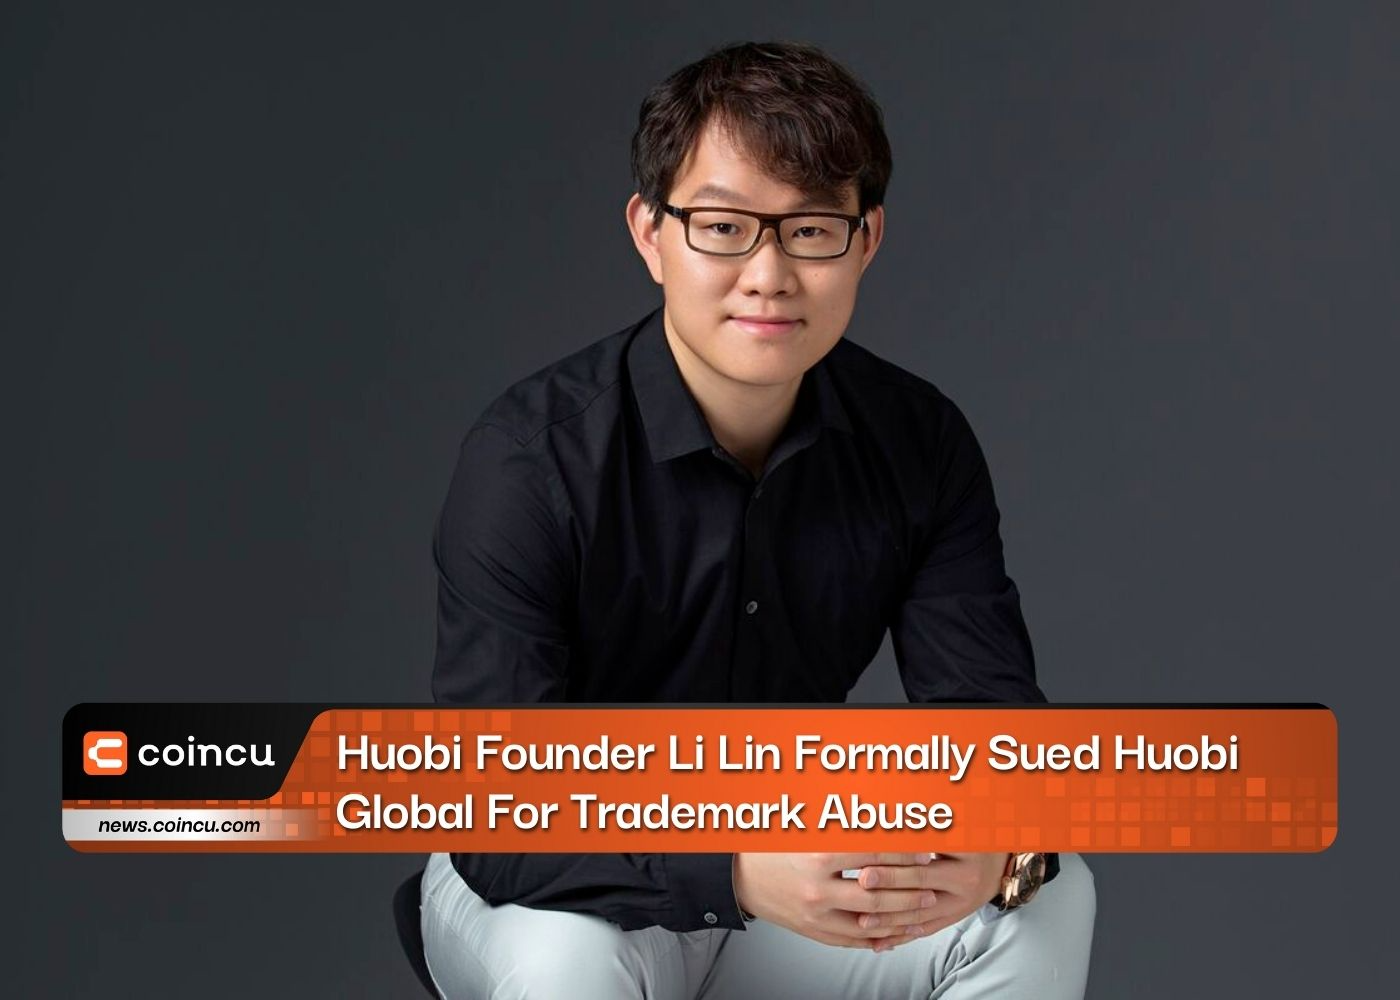 Huobi Founder Li Lin Formally Sued Huobi Global For Trademark Abuse